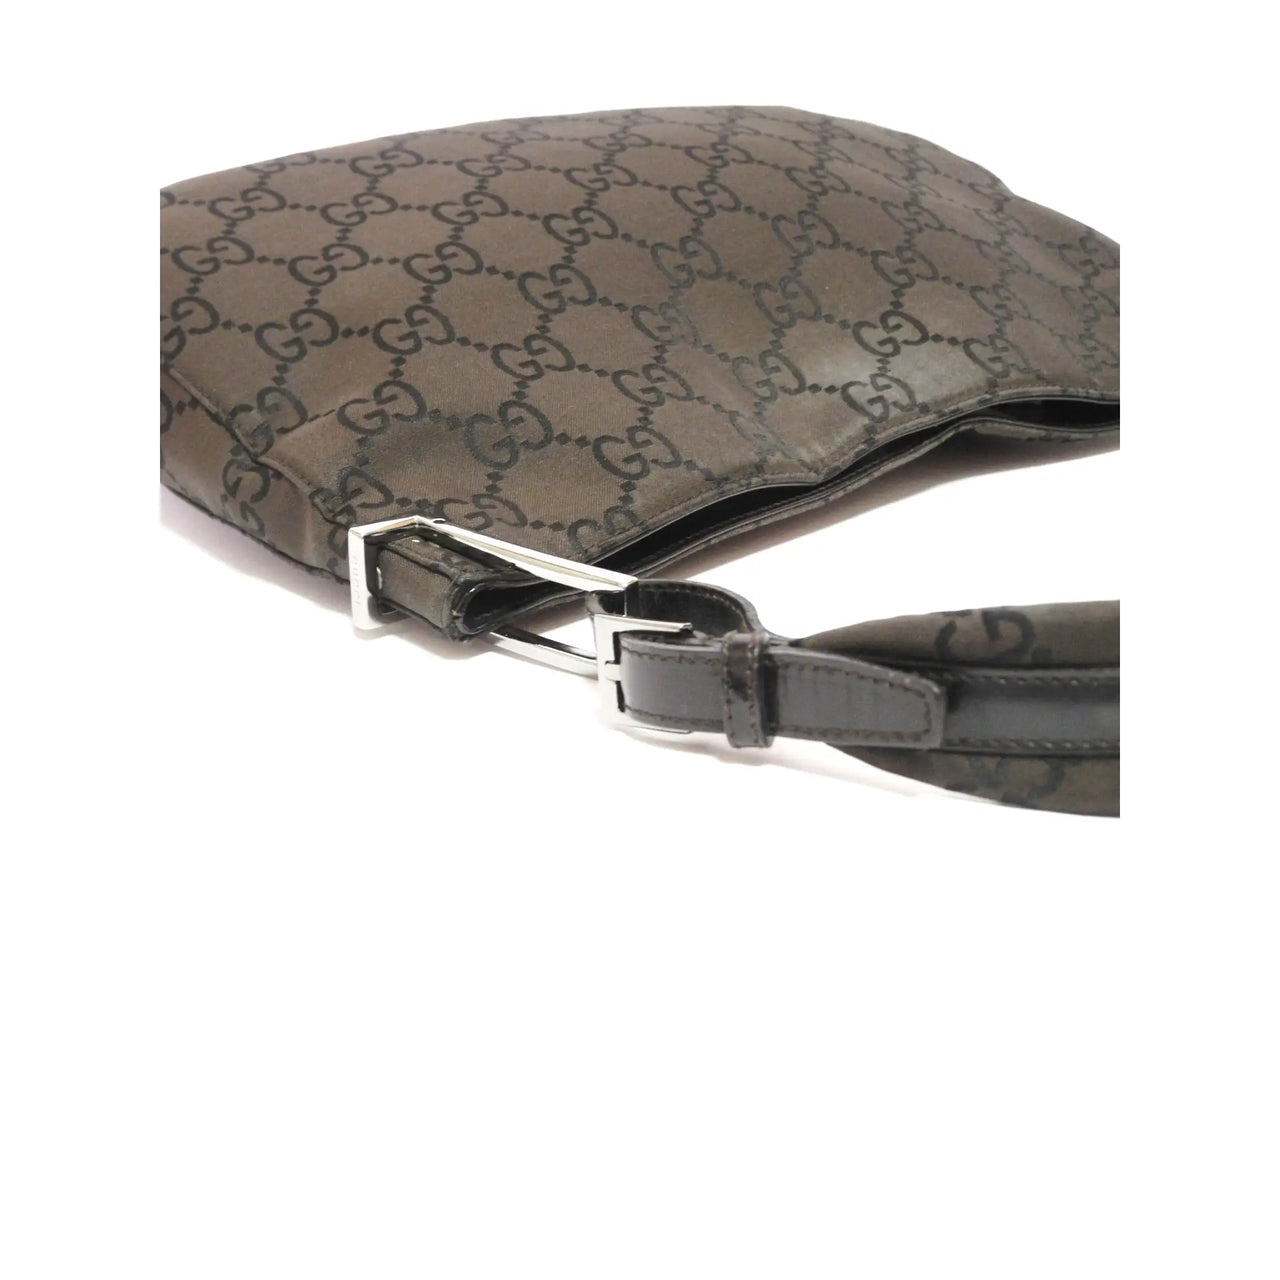 Authentic New Gucci Black Nylon GG Monogram Stripe Strap Belt